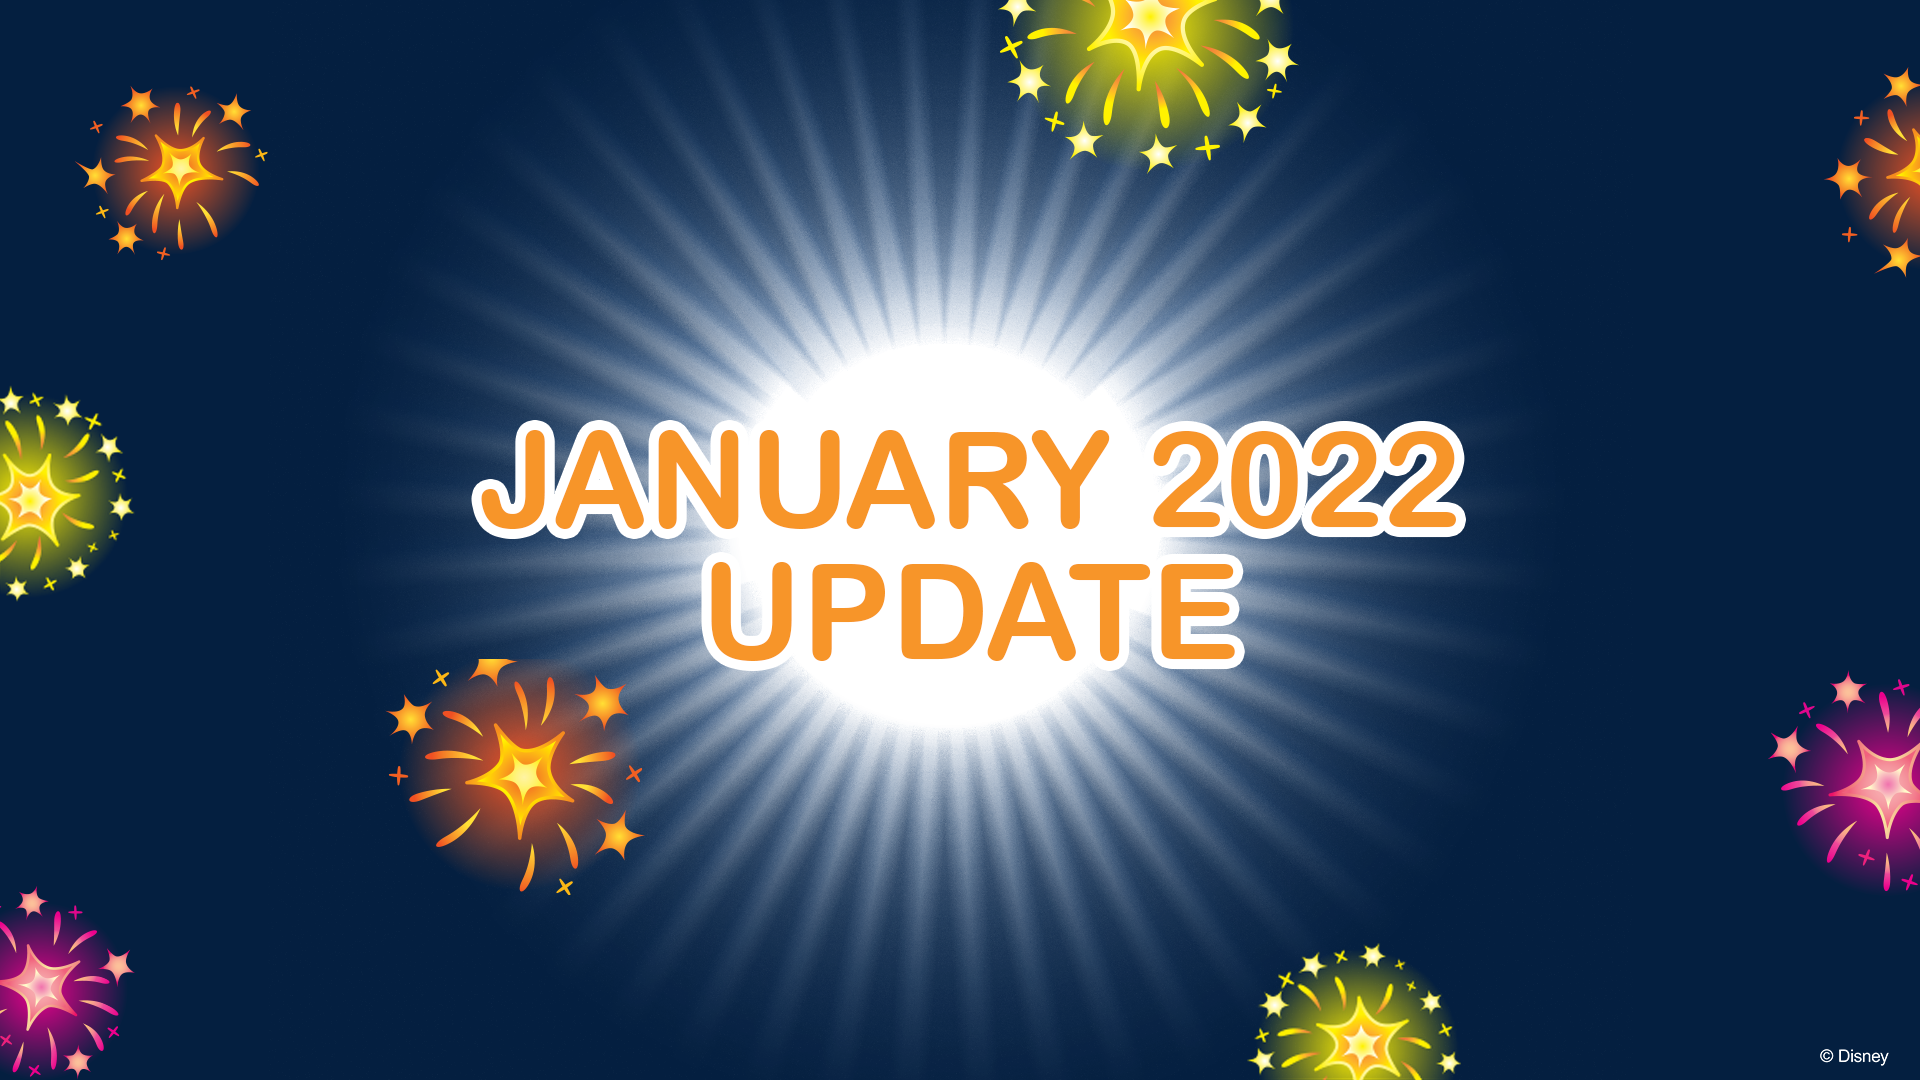 Disney Emoji Blitz Event Calendar 2022 January 2022 Update - Disney Emoji Blitz! Prince Ali, Minnie, And More!